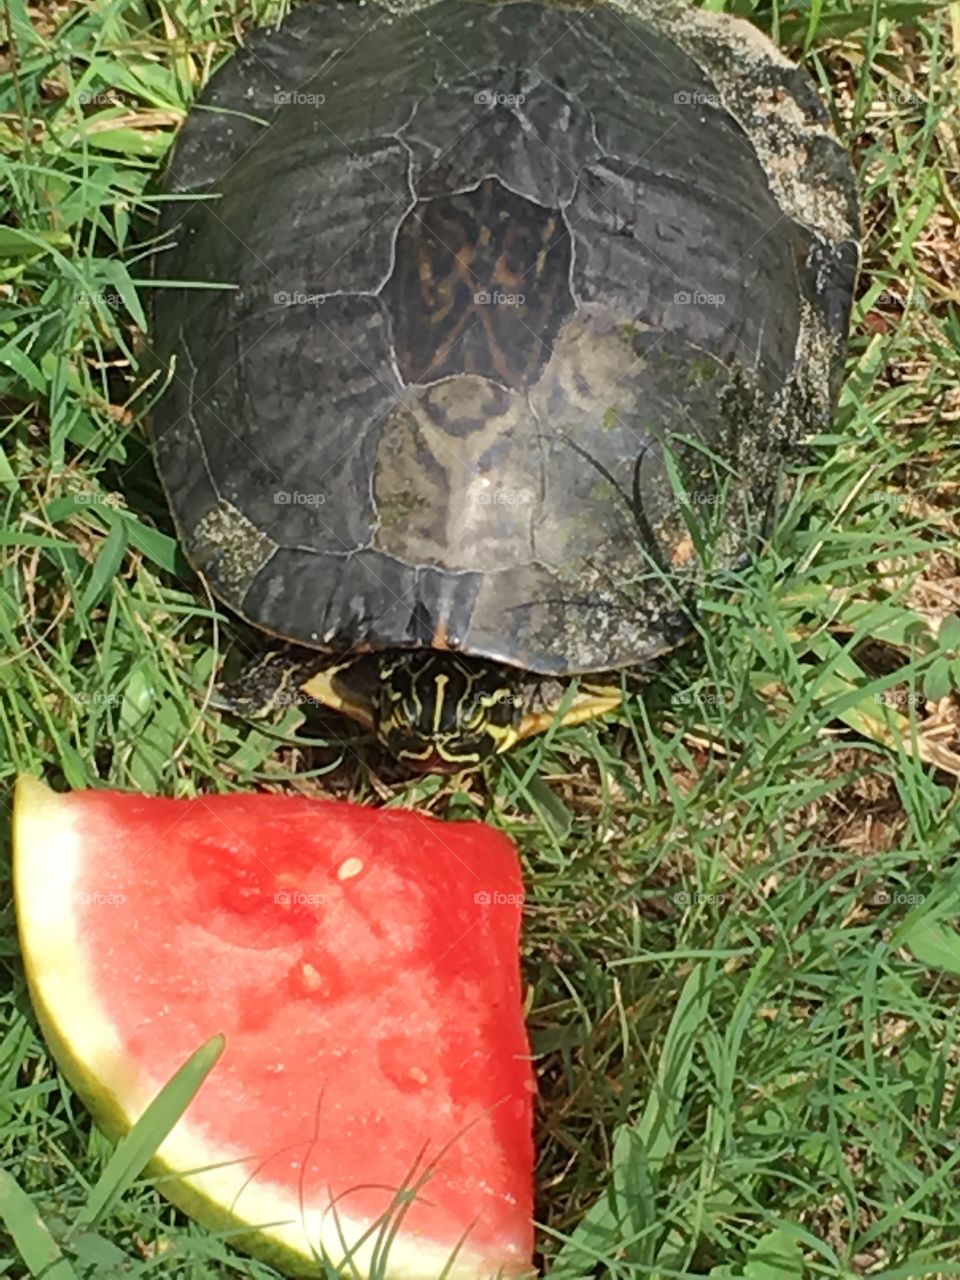 Green Florida turtle eating watermelon 🍉